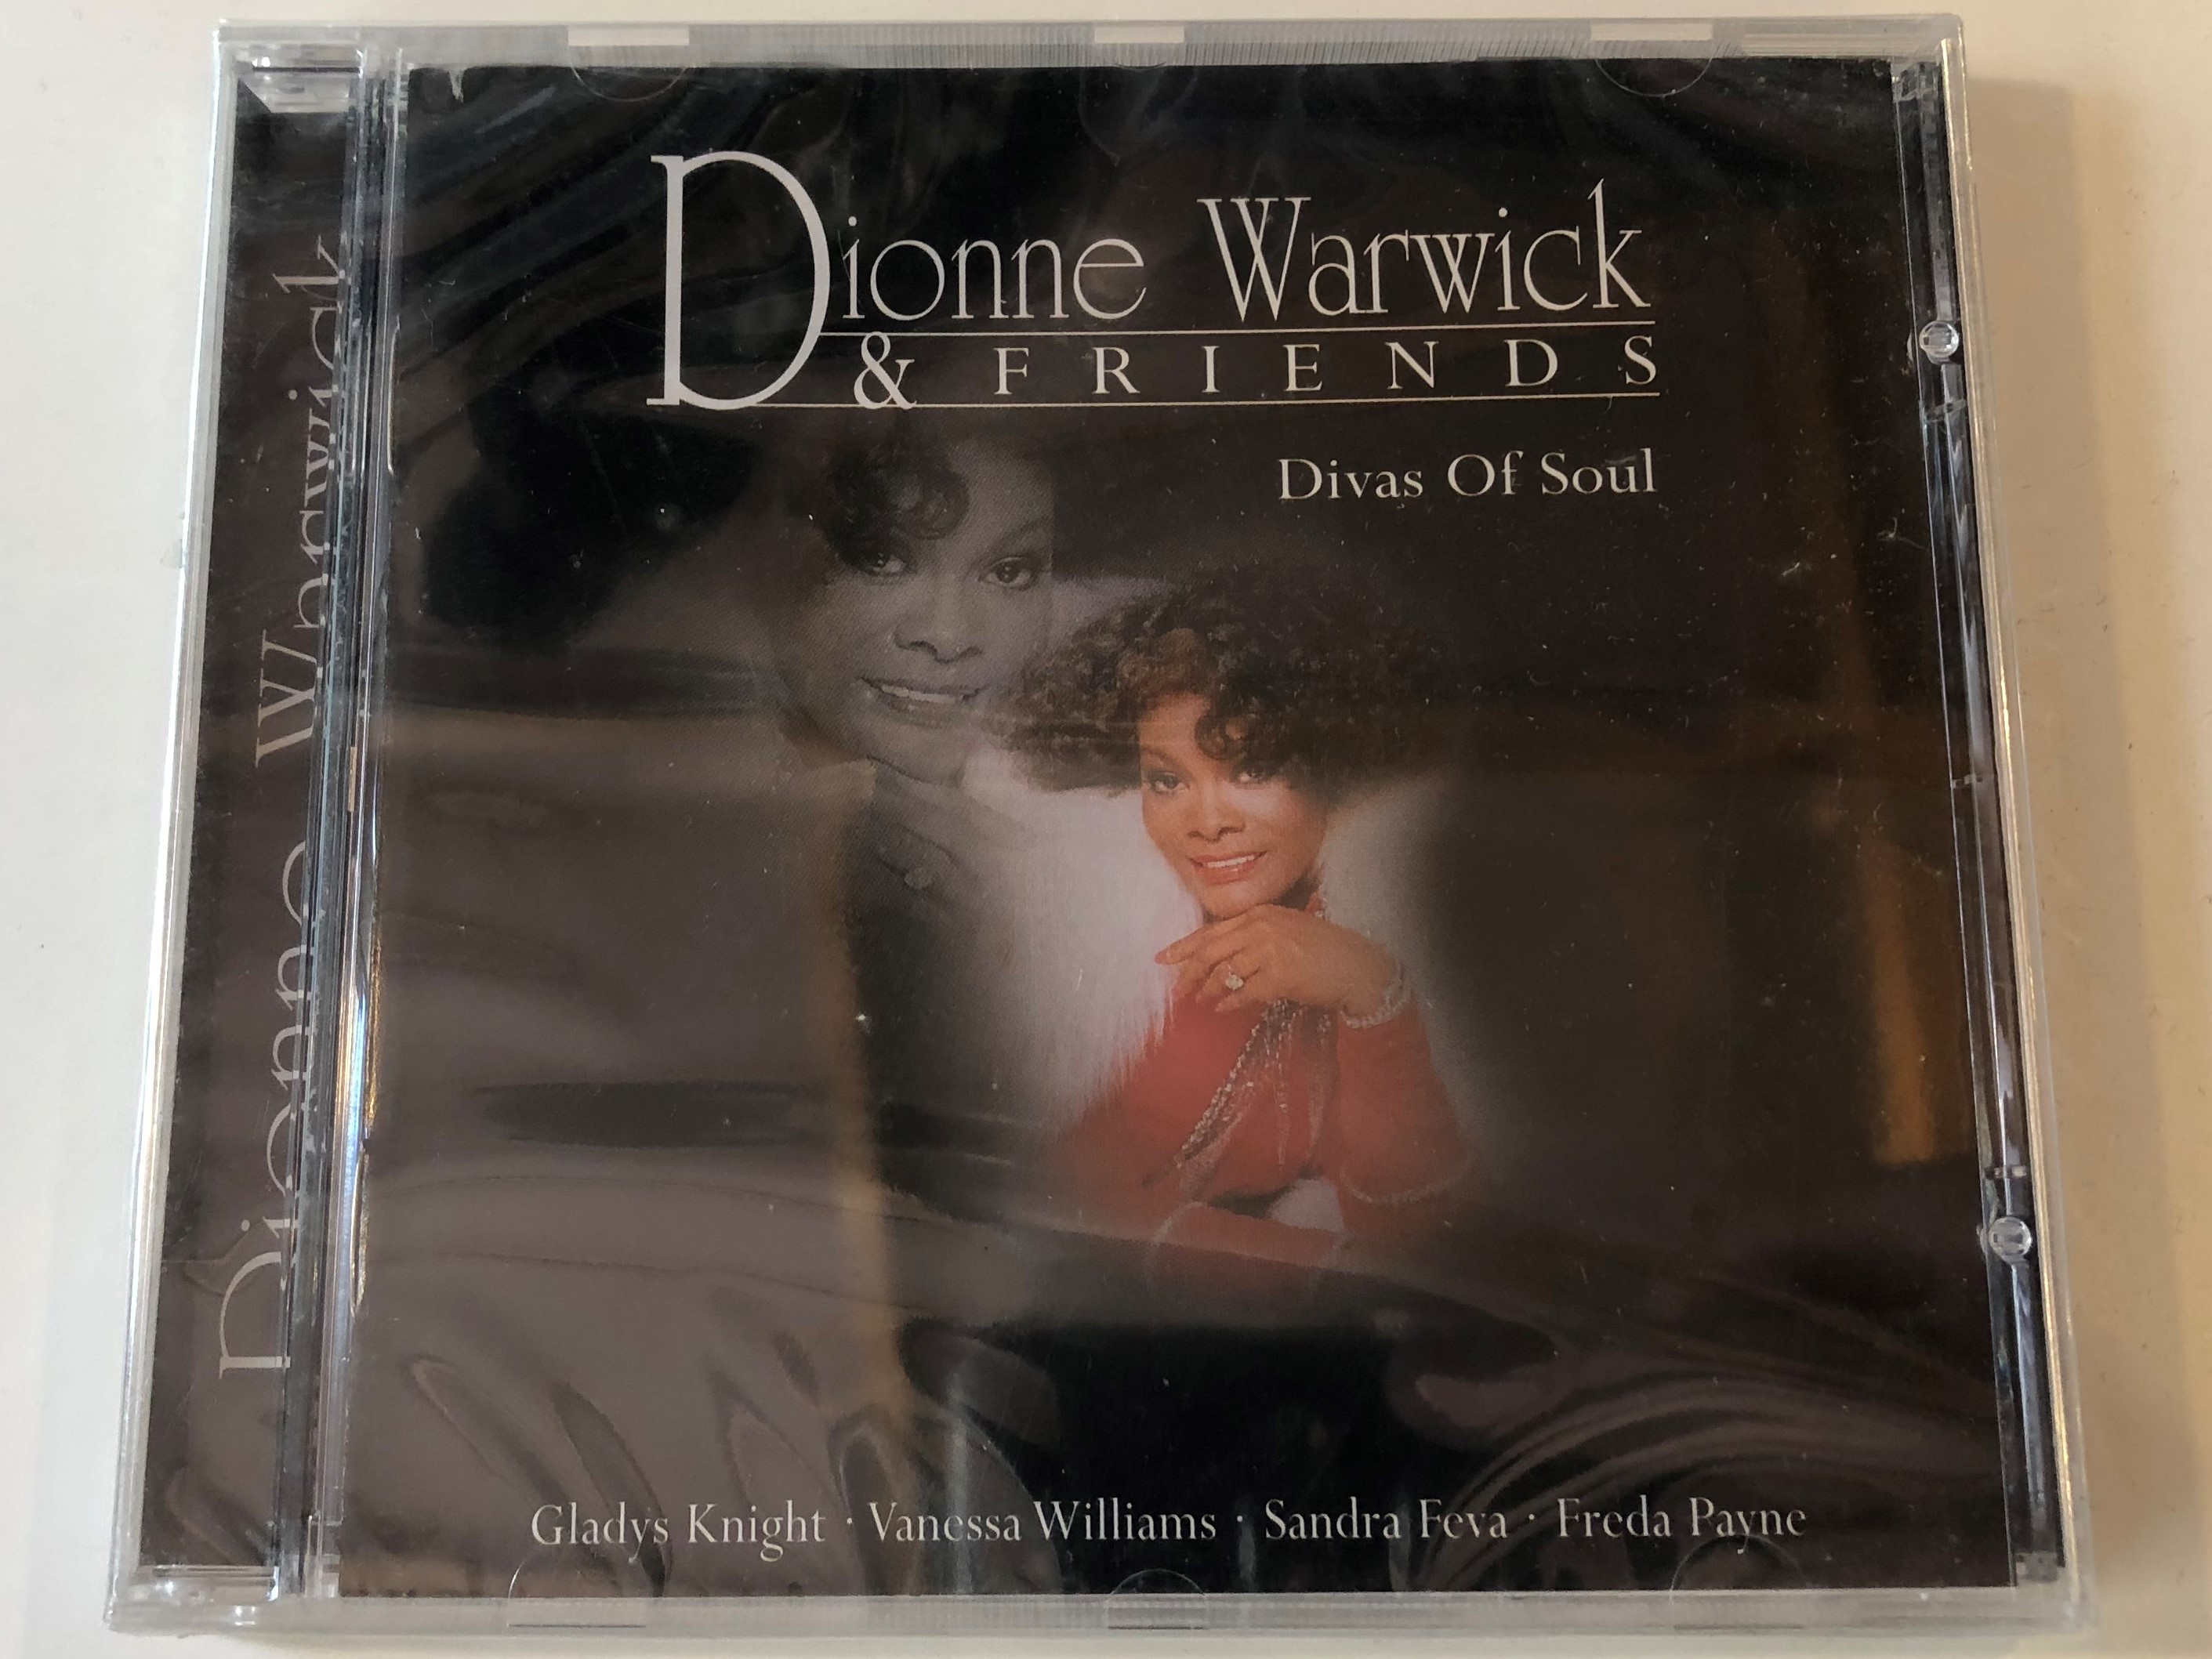 dionne-warwick-friends-divas-of-soul-gladys-knight-vanessa-williams-sandra-feva-freda-payne-elap-audio-cd-1999-5706238301364-1-.jpg